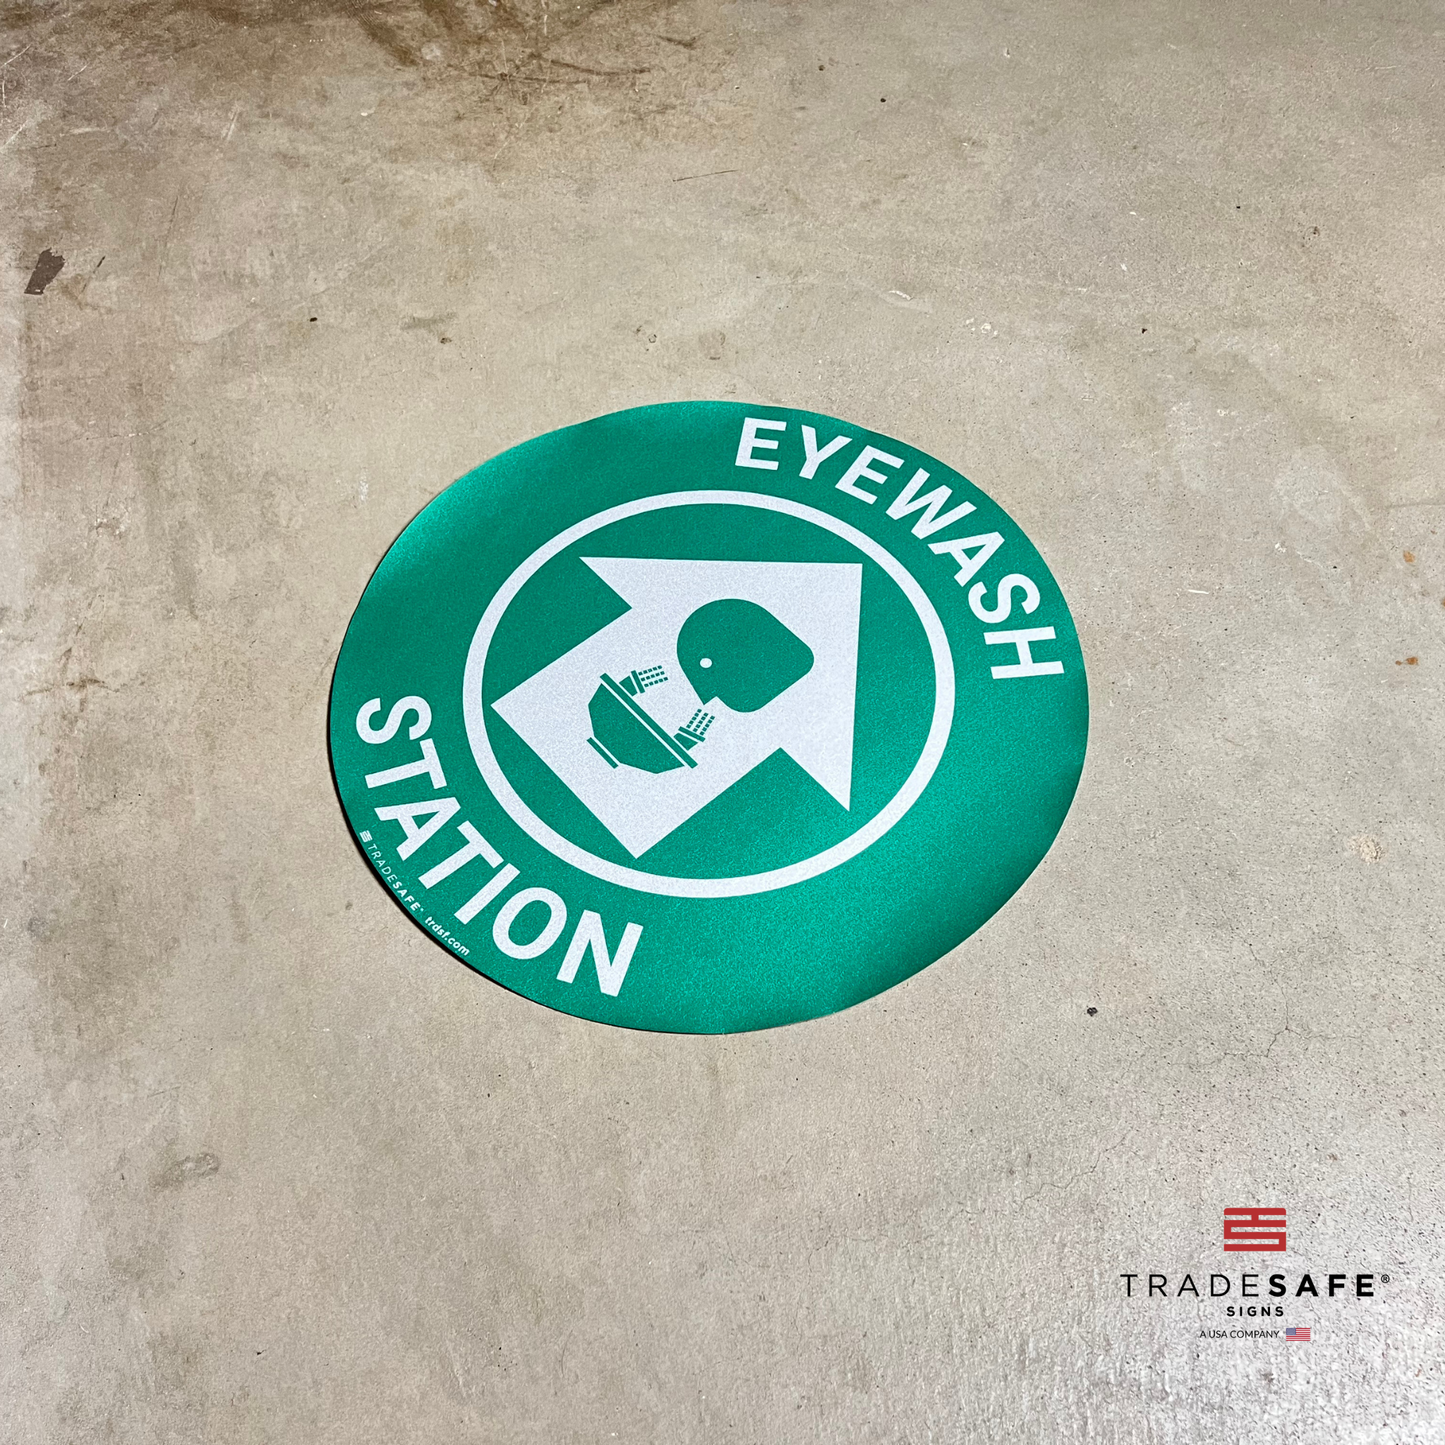 eyewash station sign on floor